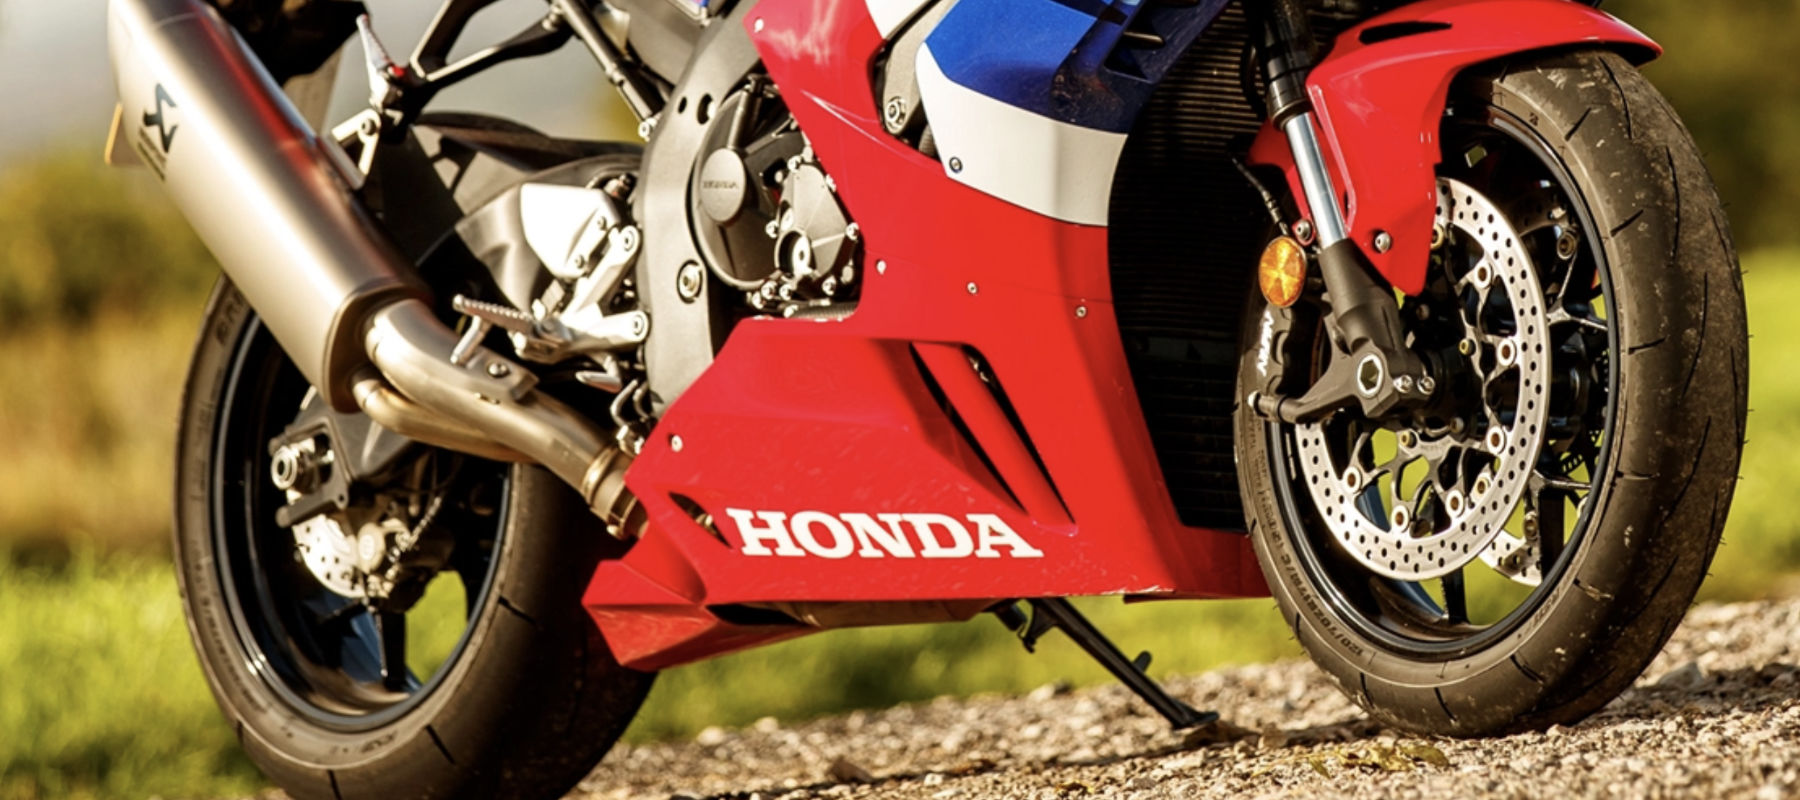 Honda Motorcycle Covers